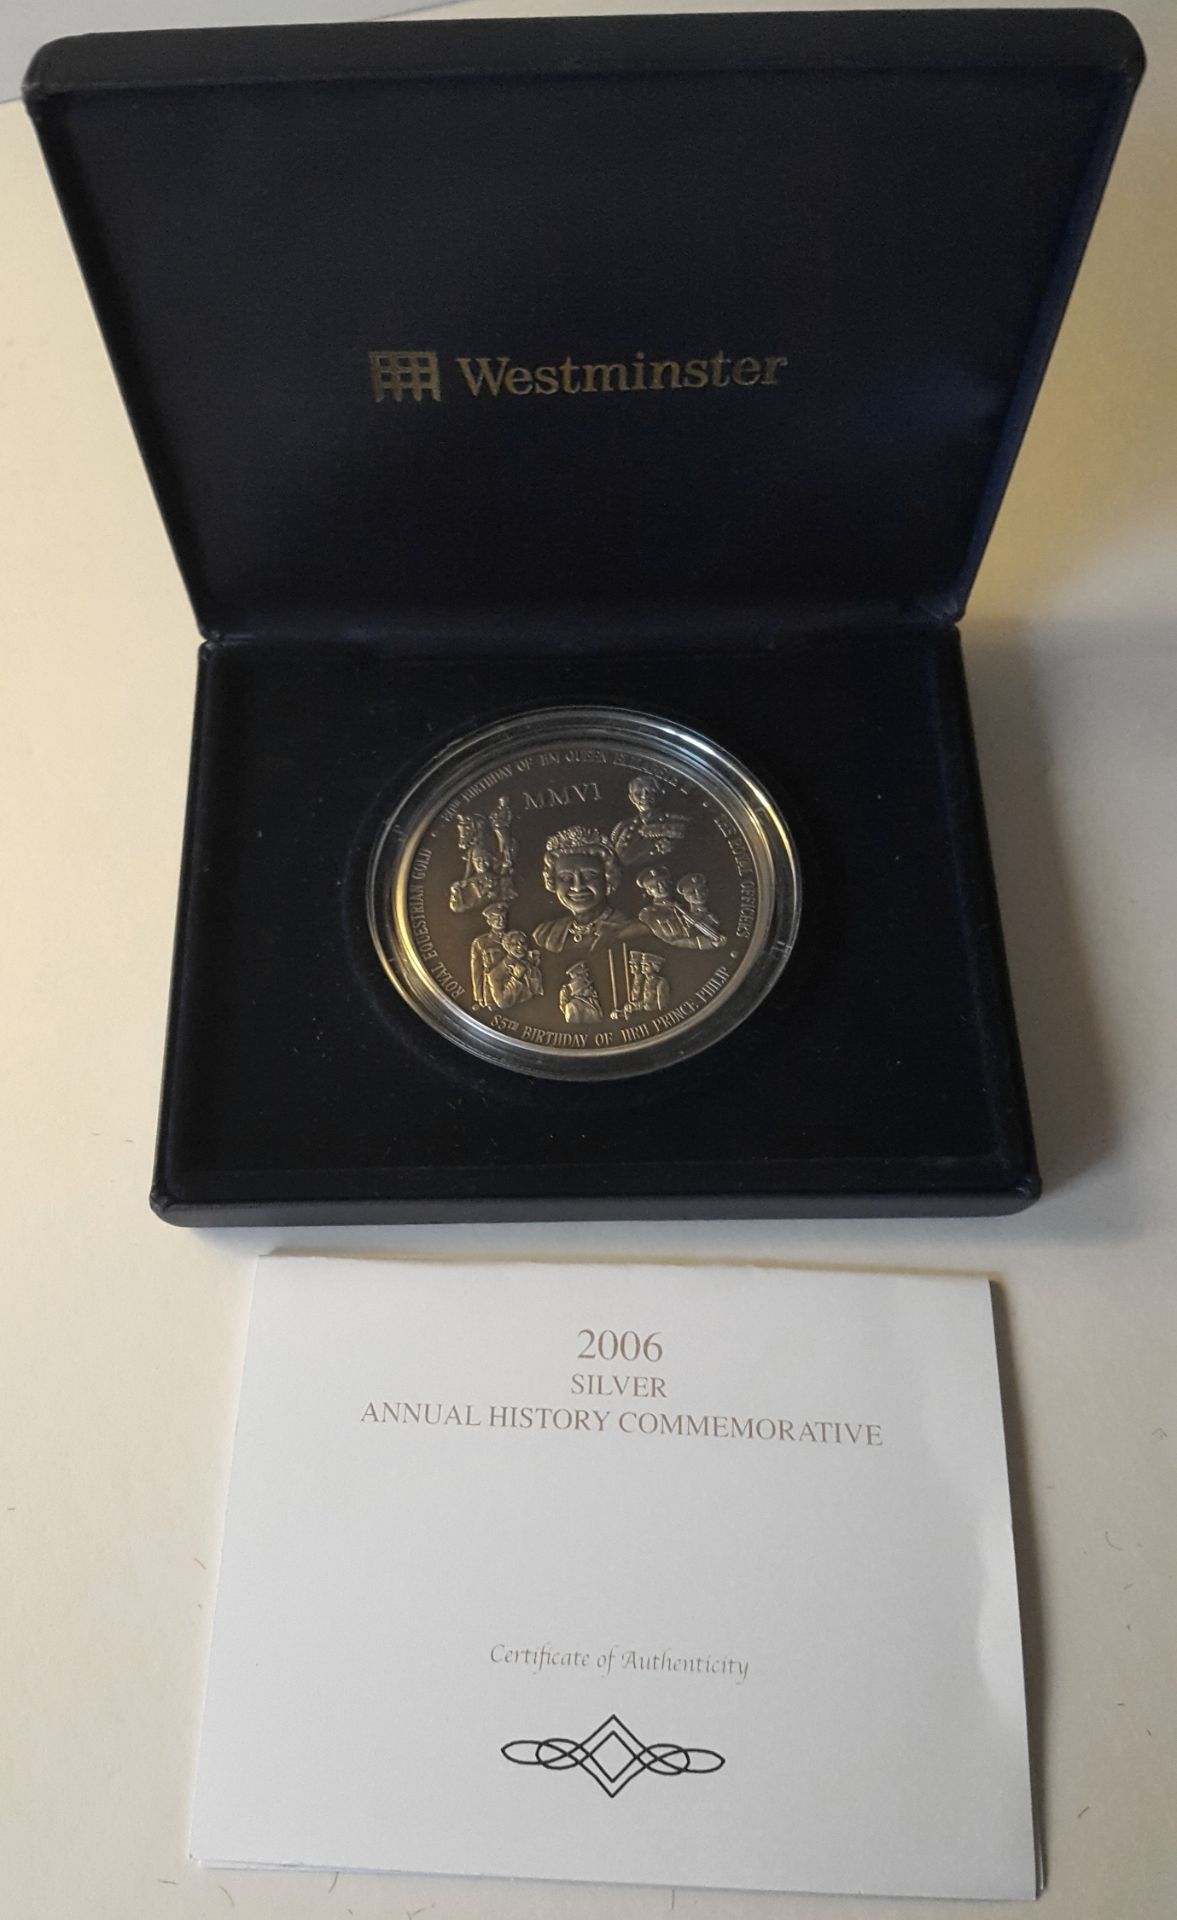 Vintage Collectors Coin 999/1000 Silver 2006 Annual History Commemorative 5oz